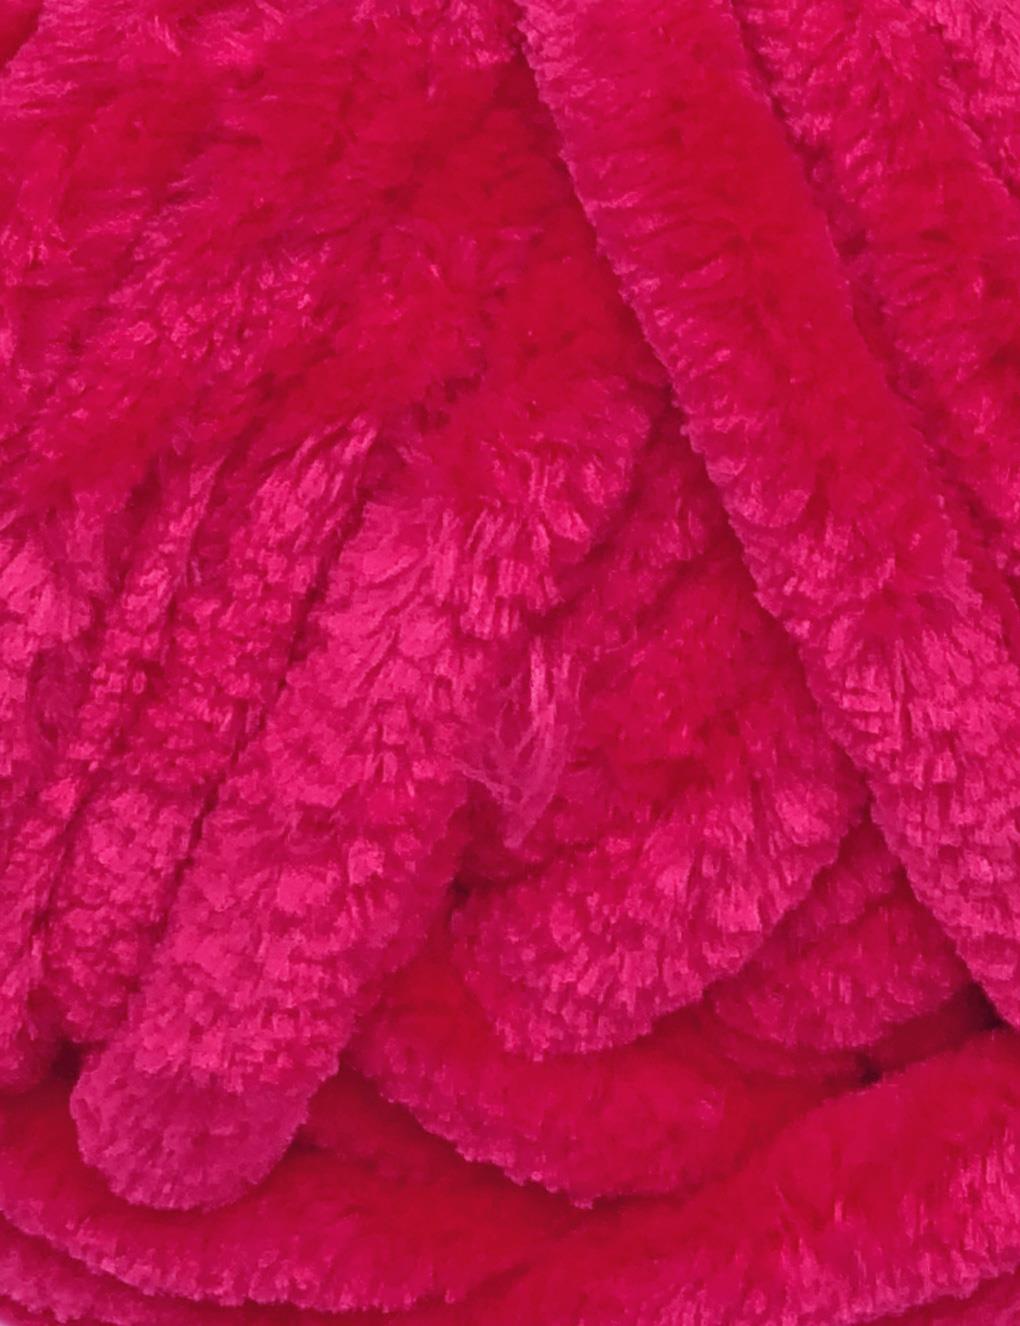 Cygnet Scrumpalicious Cherry Pink (4004) chenille yarn - 200g